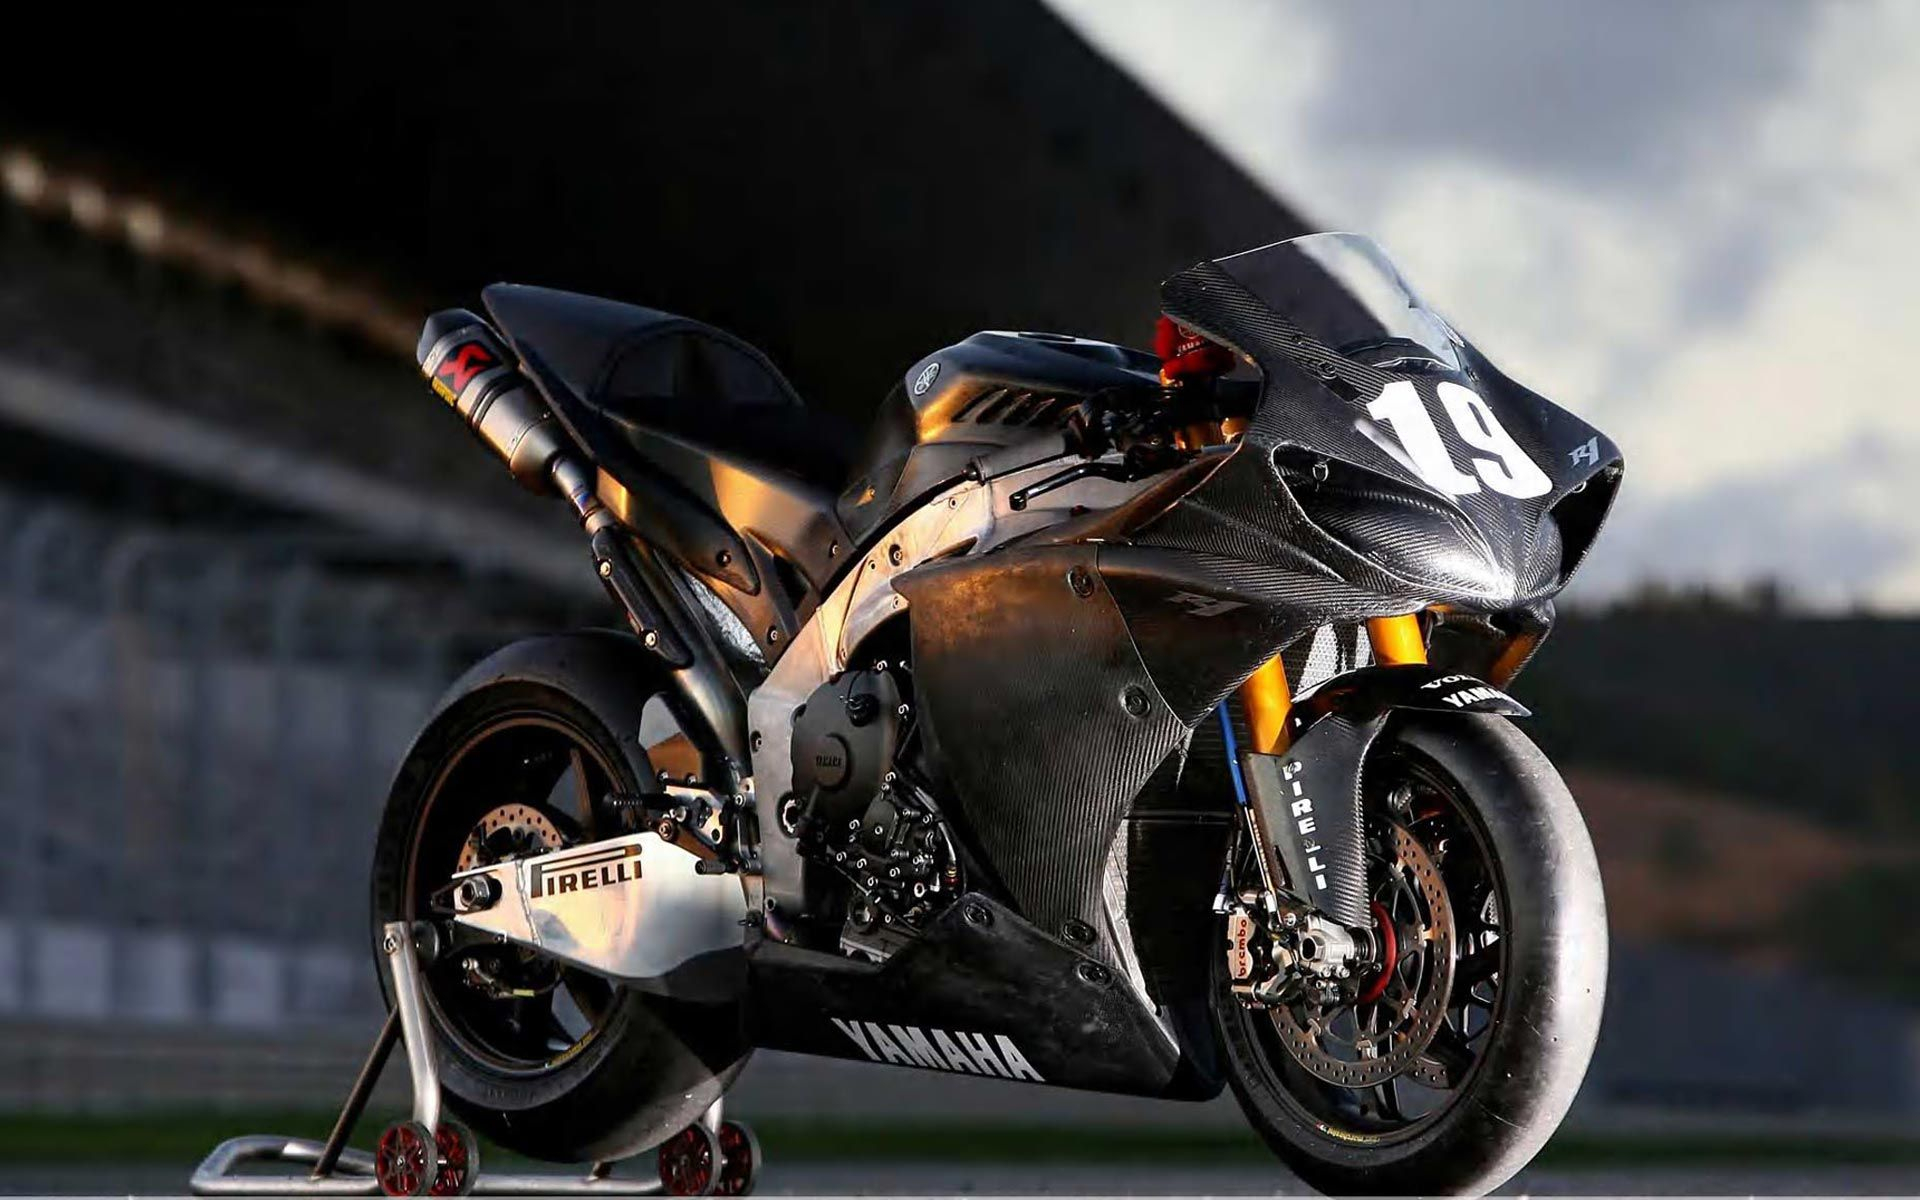 1920x1200 Yamaha YZF R1 Pirelli hd Wallpaper | High Quality Wallpapers,Wallpaper ... | Racing bikes, Yamaha motorcycles, Fast bikes